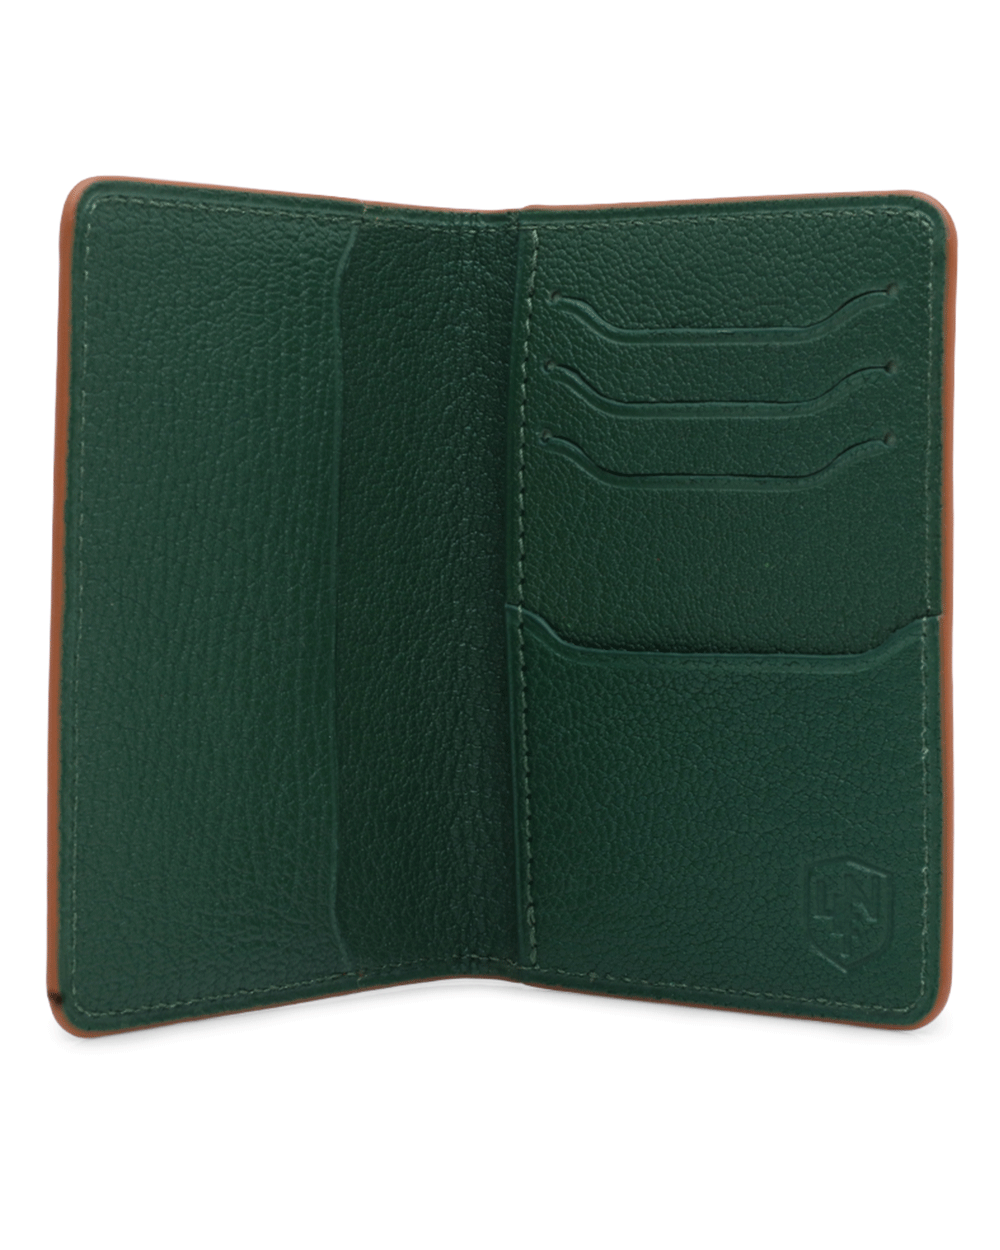 L.E.N. Alligator Passport Wallet in Cognac – Stanley Korshak